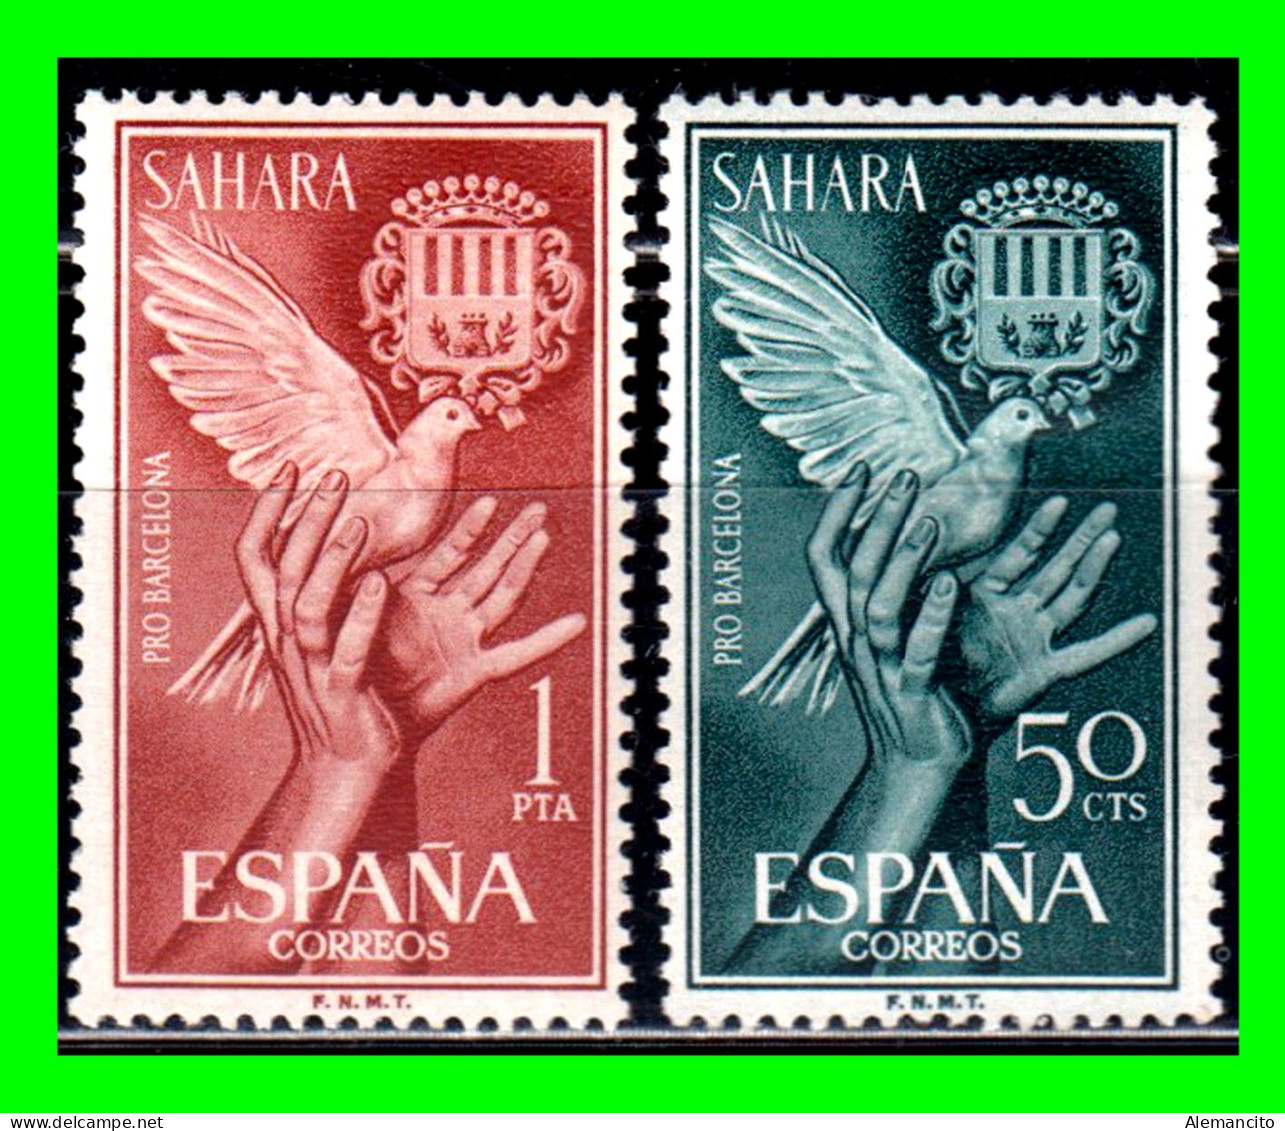 ESPAÑA COLONIAS ESPAÑOLAS ( SAHARA ESPAÑOL AFRICA ) SERIE DE SELLOS AÑO 1963 - AYUDA A BARCELONA - ( NUEVOS ) - Sahara Español